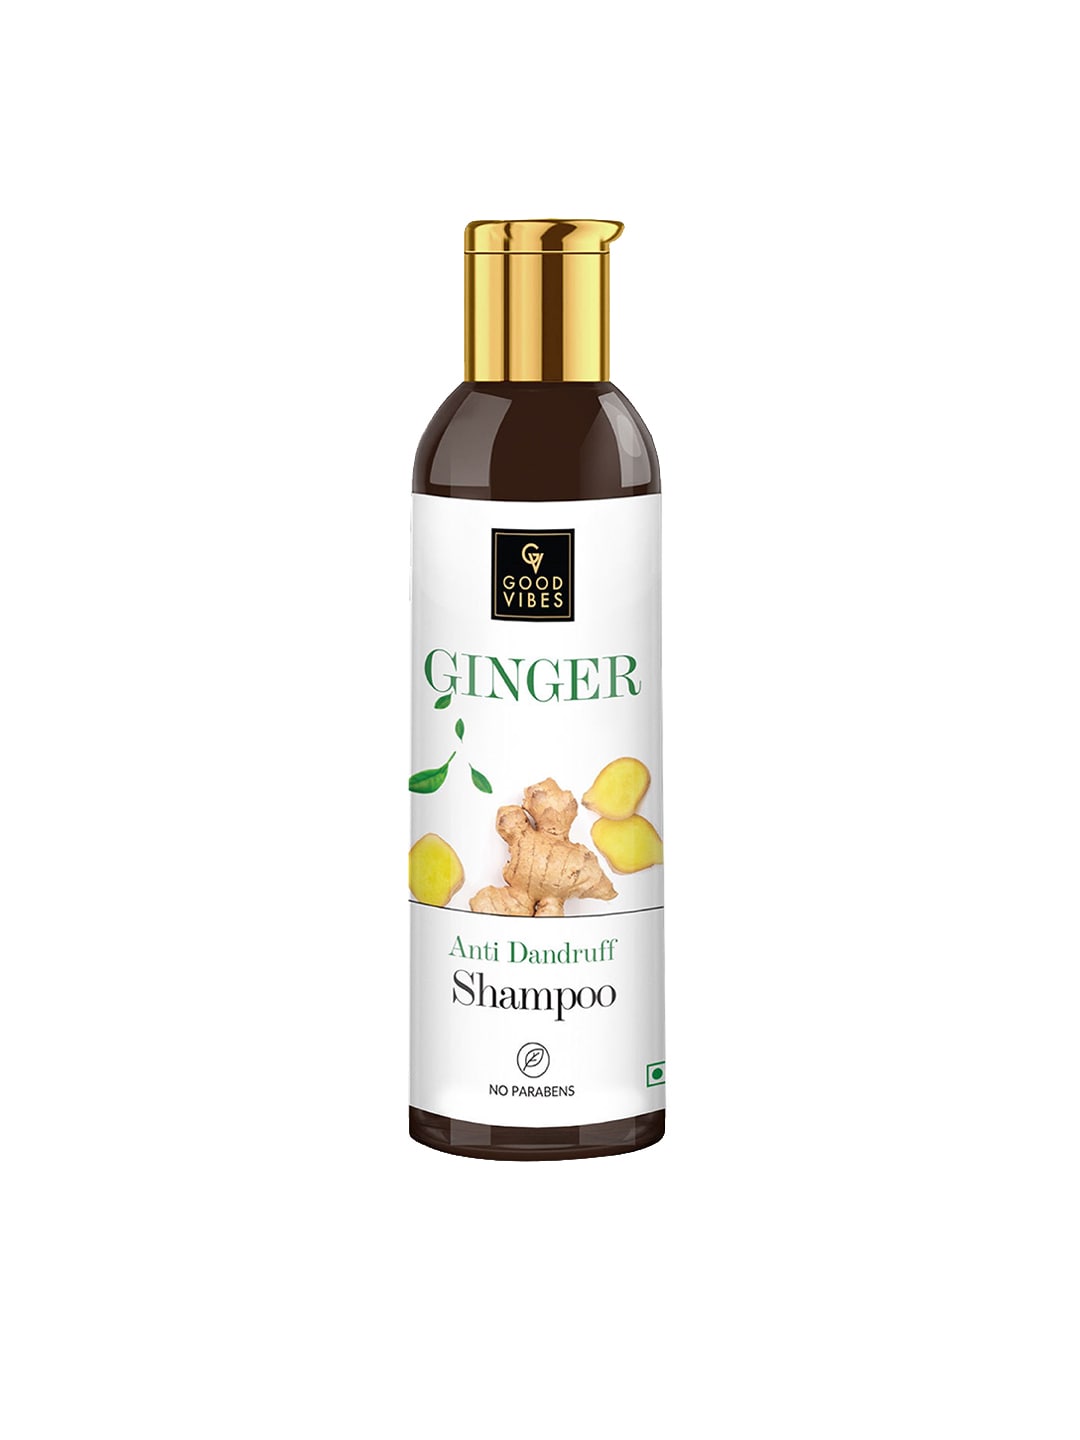 Good Vibes Ginger Anti Dandruff Shampoo - 200 ml Price in India